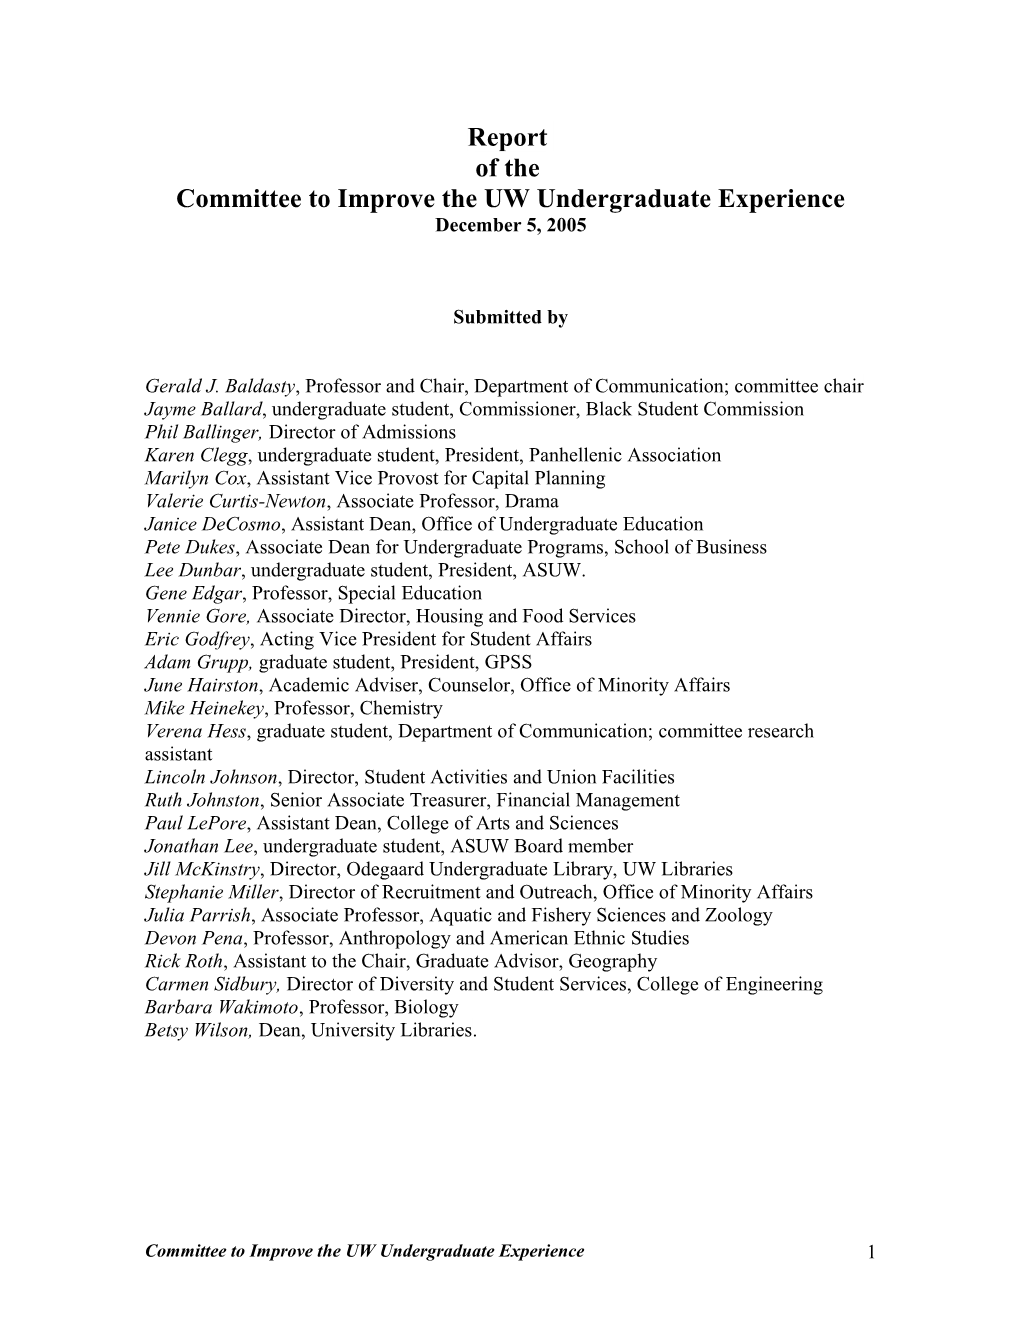 Report of the Committee to Improve the UW Undergraduate Experience